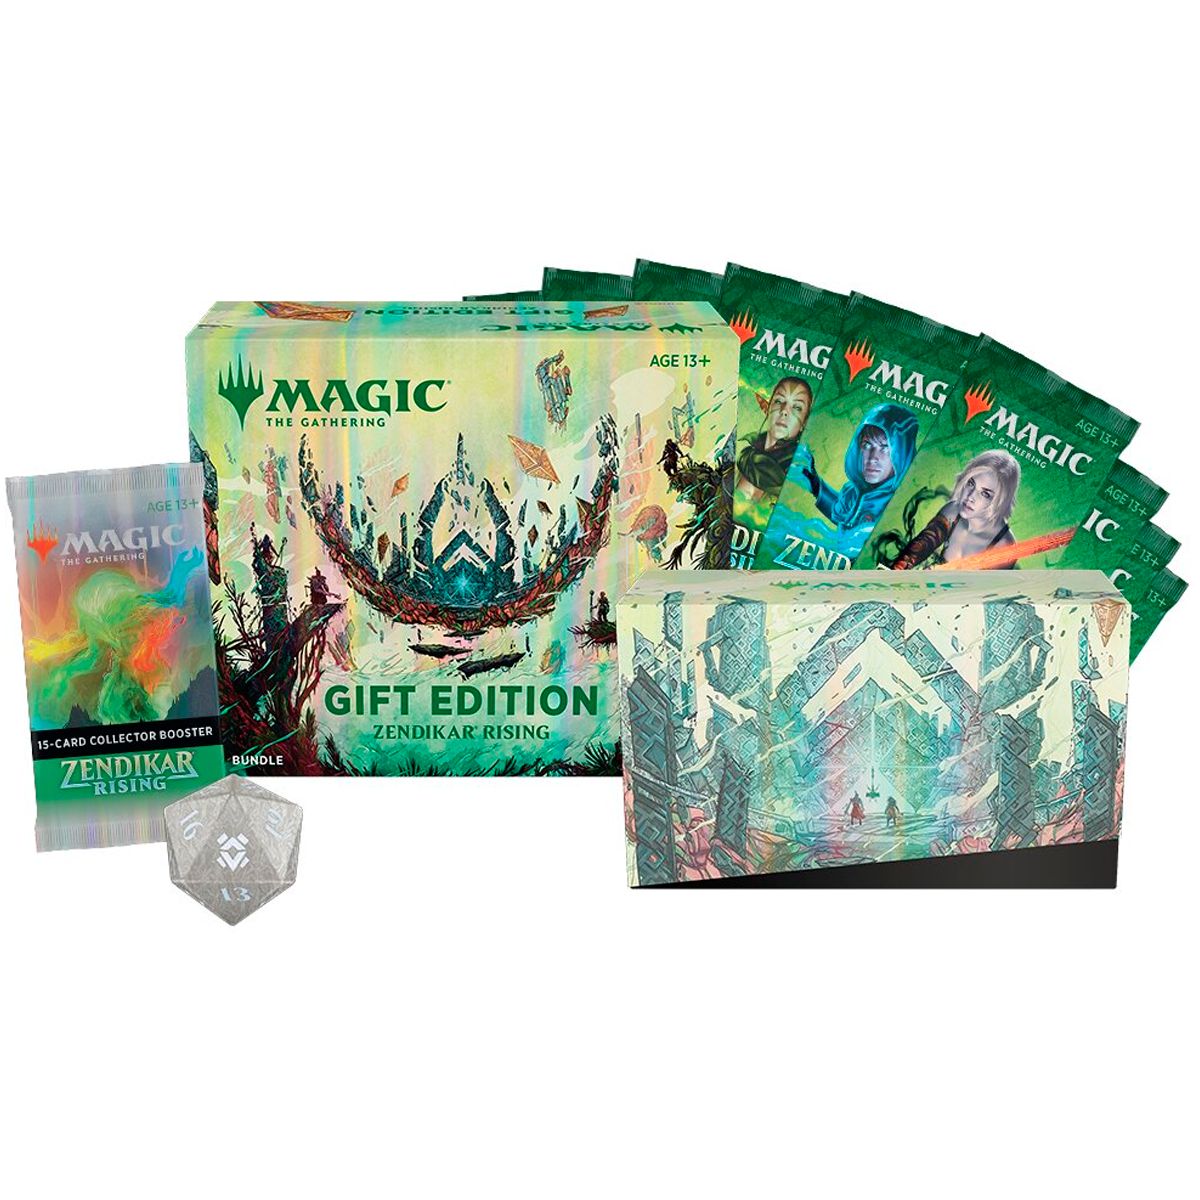 Magic Bundle Gift Edition Zendikar Rising Inglês